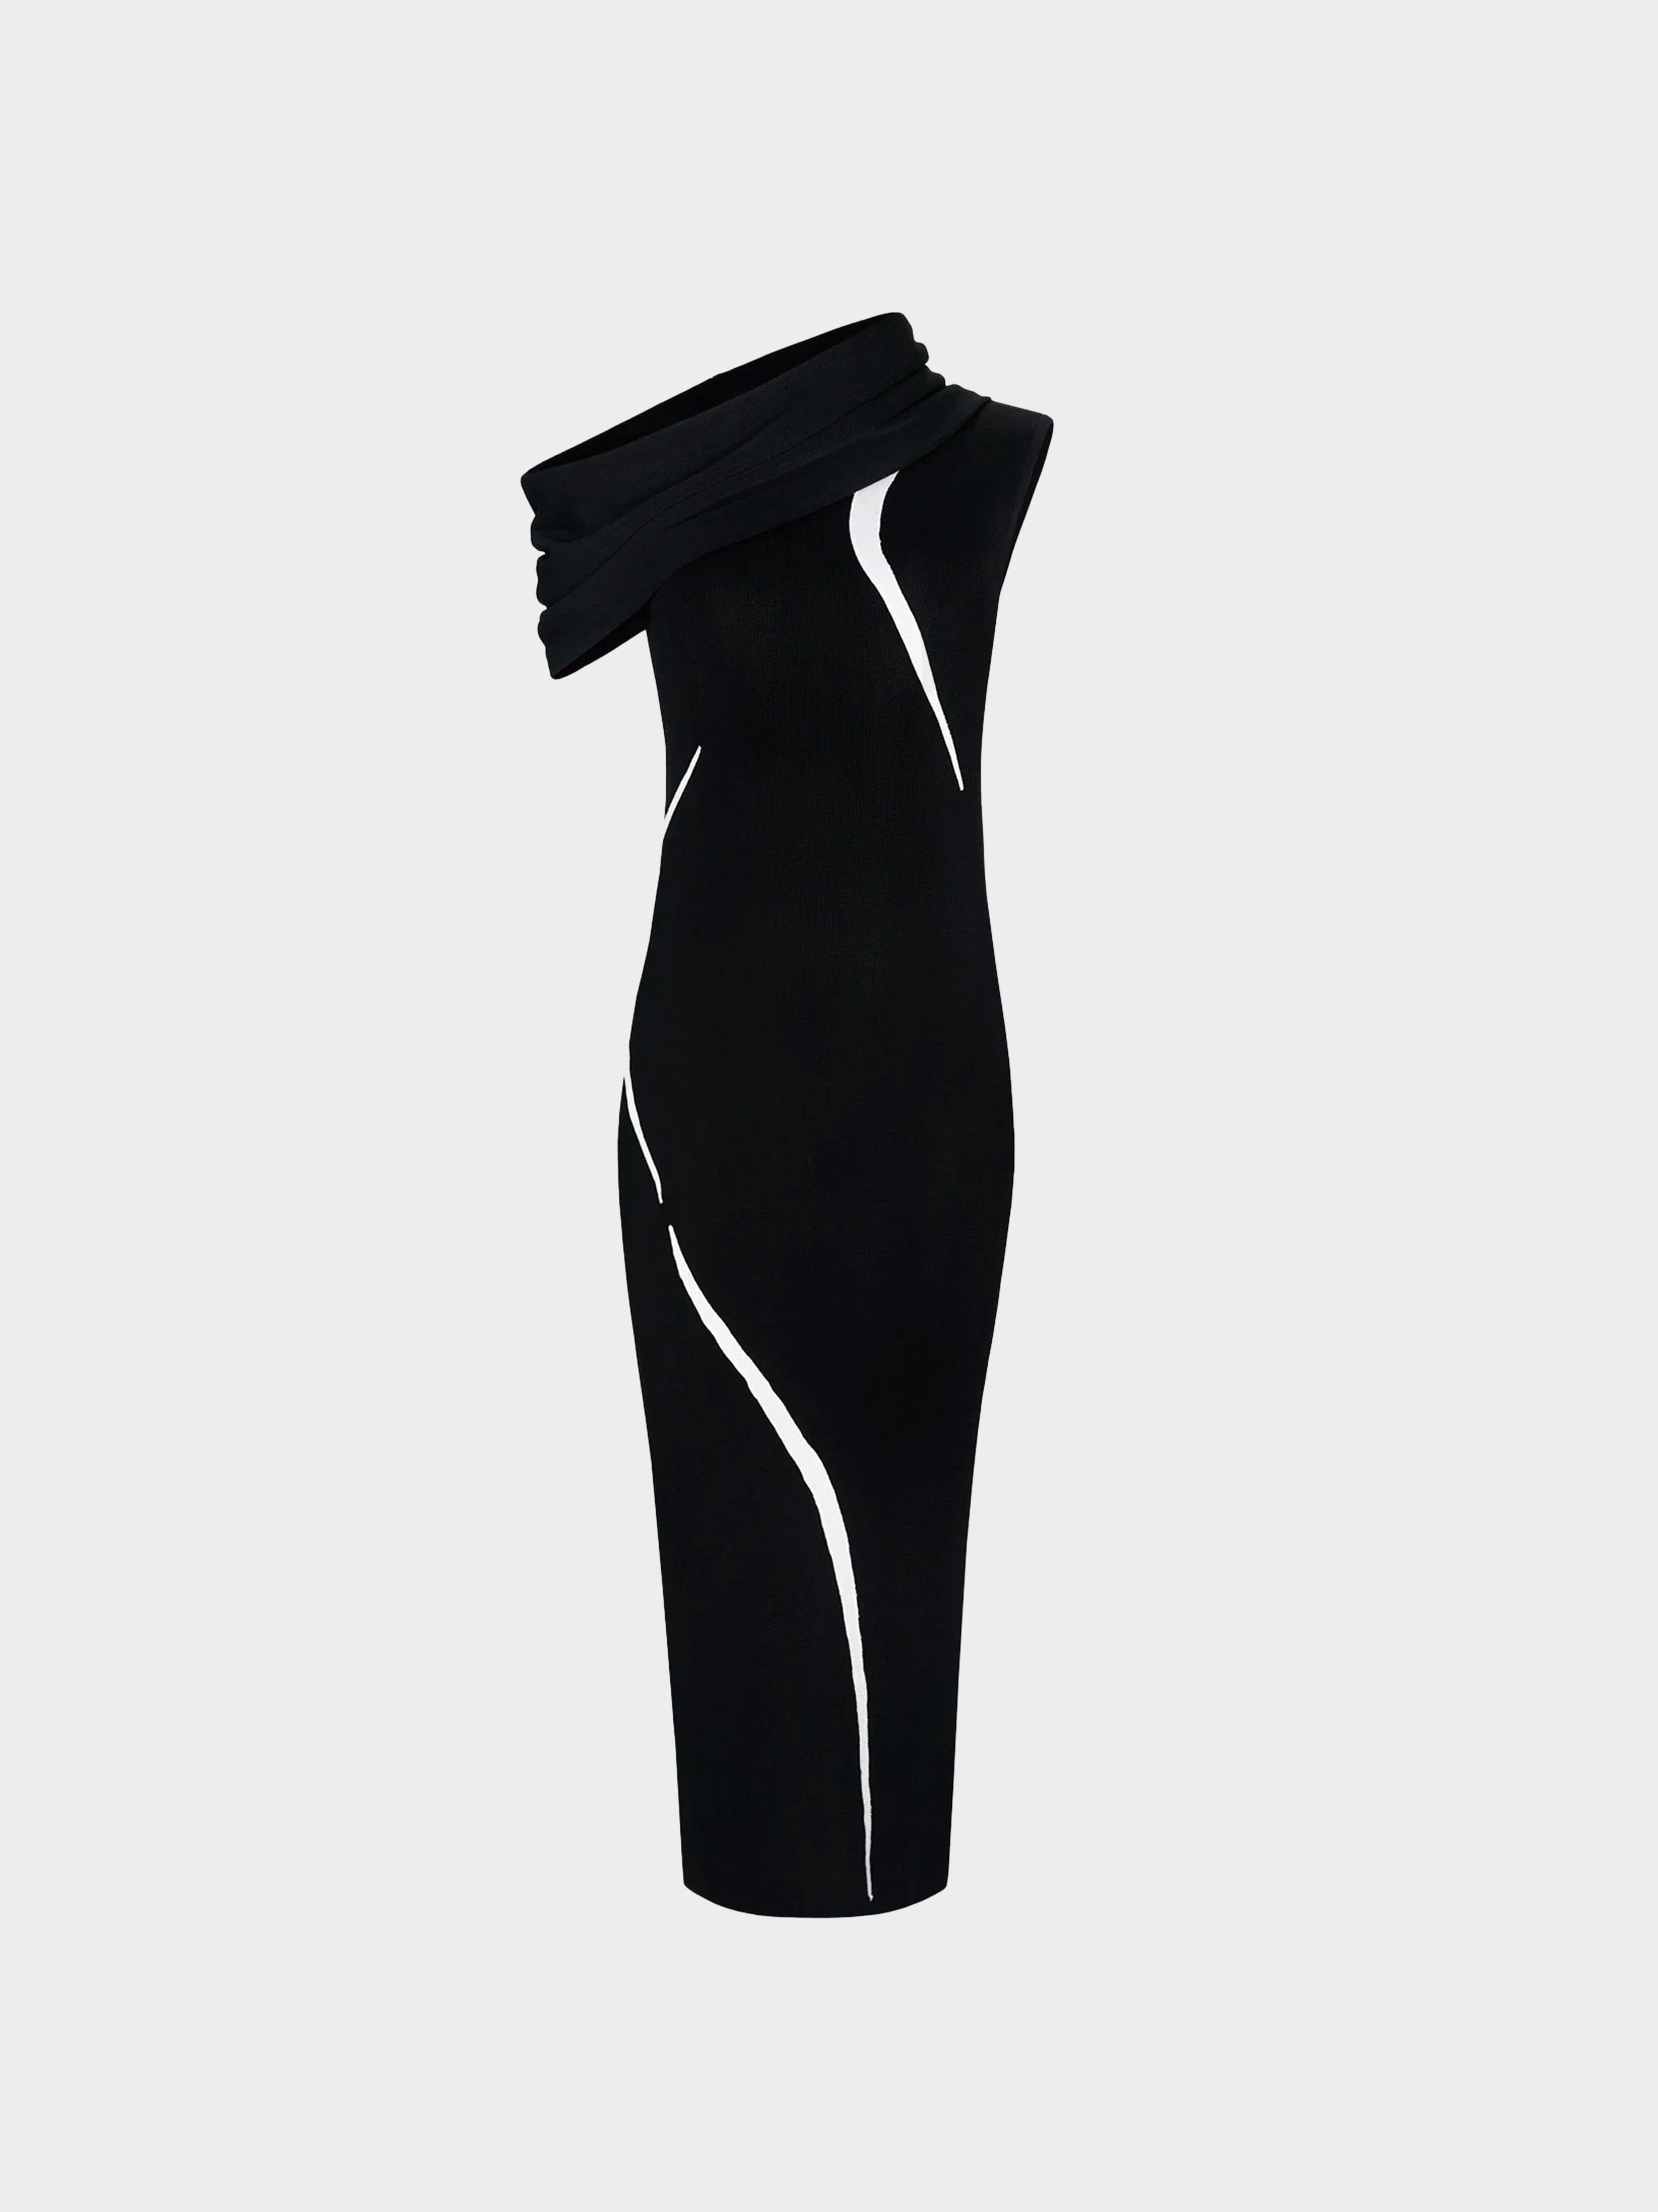 Thierry Mugler Spring 1999 Black and White Contoured Dress